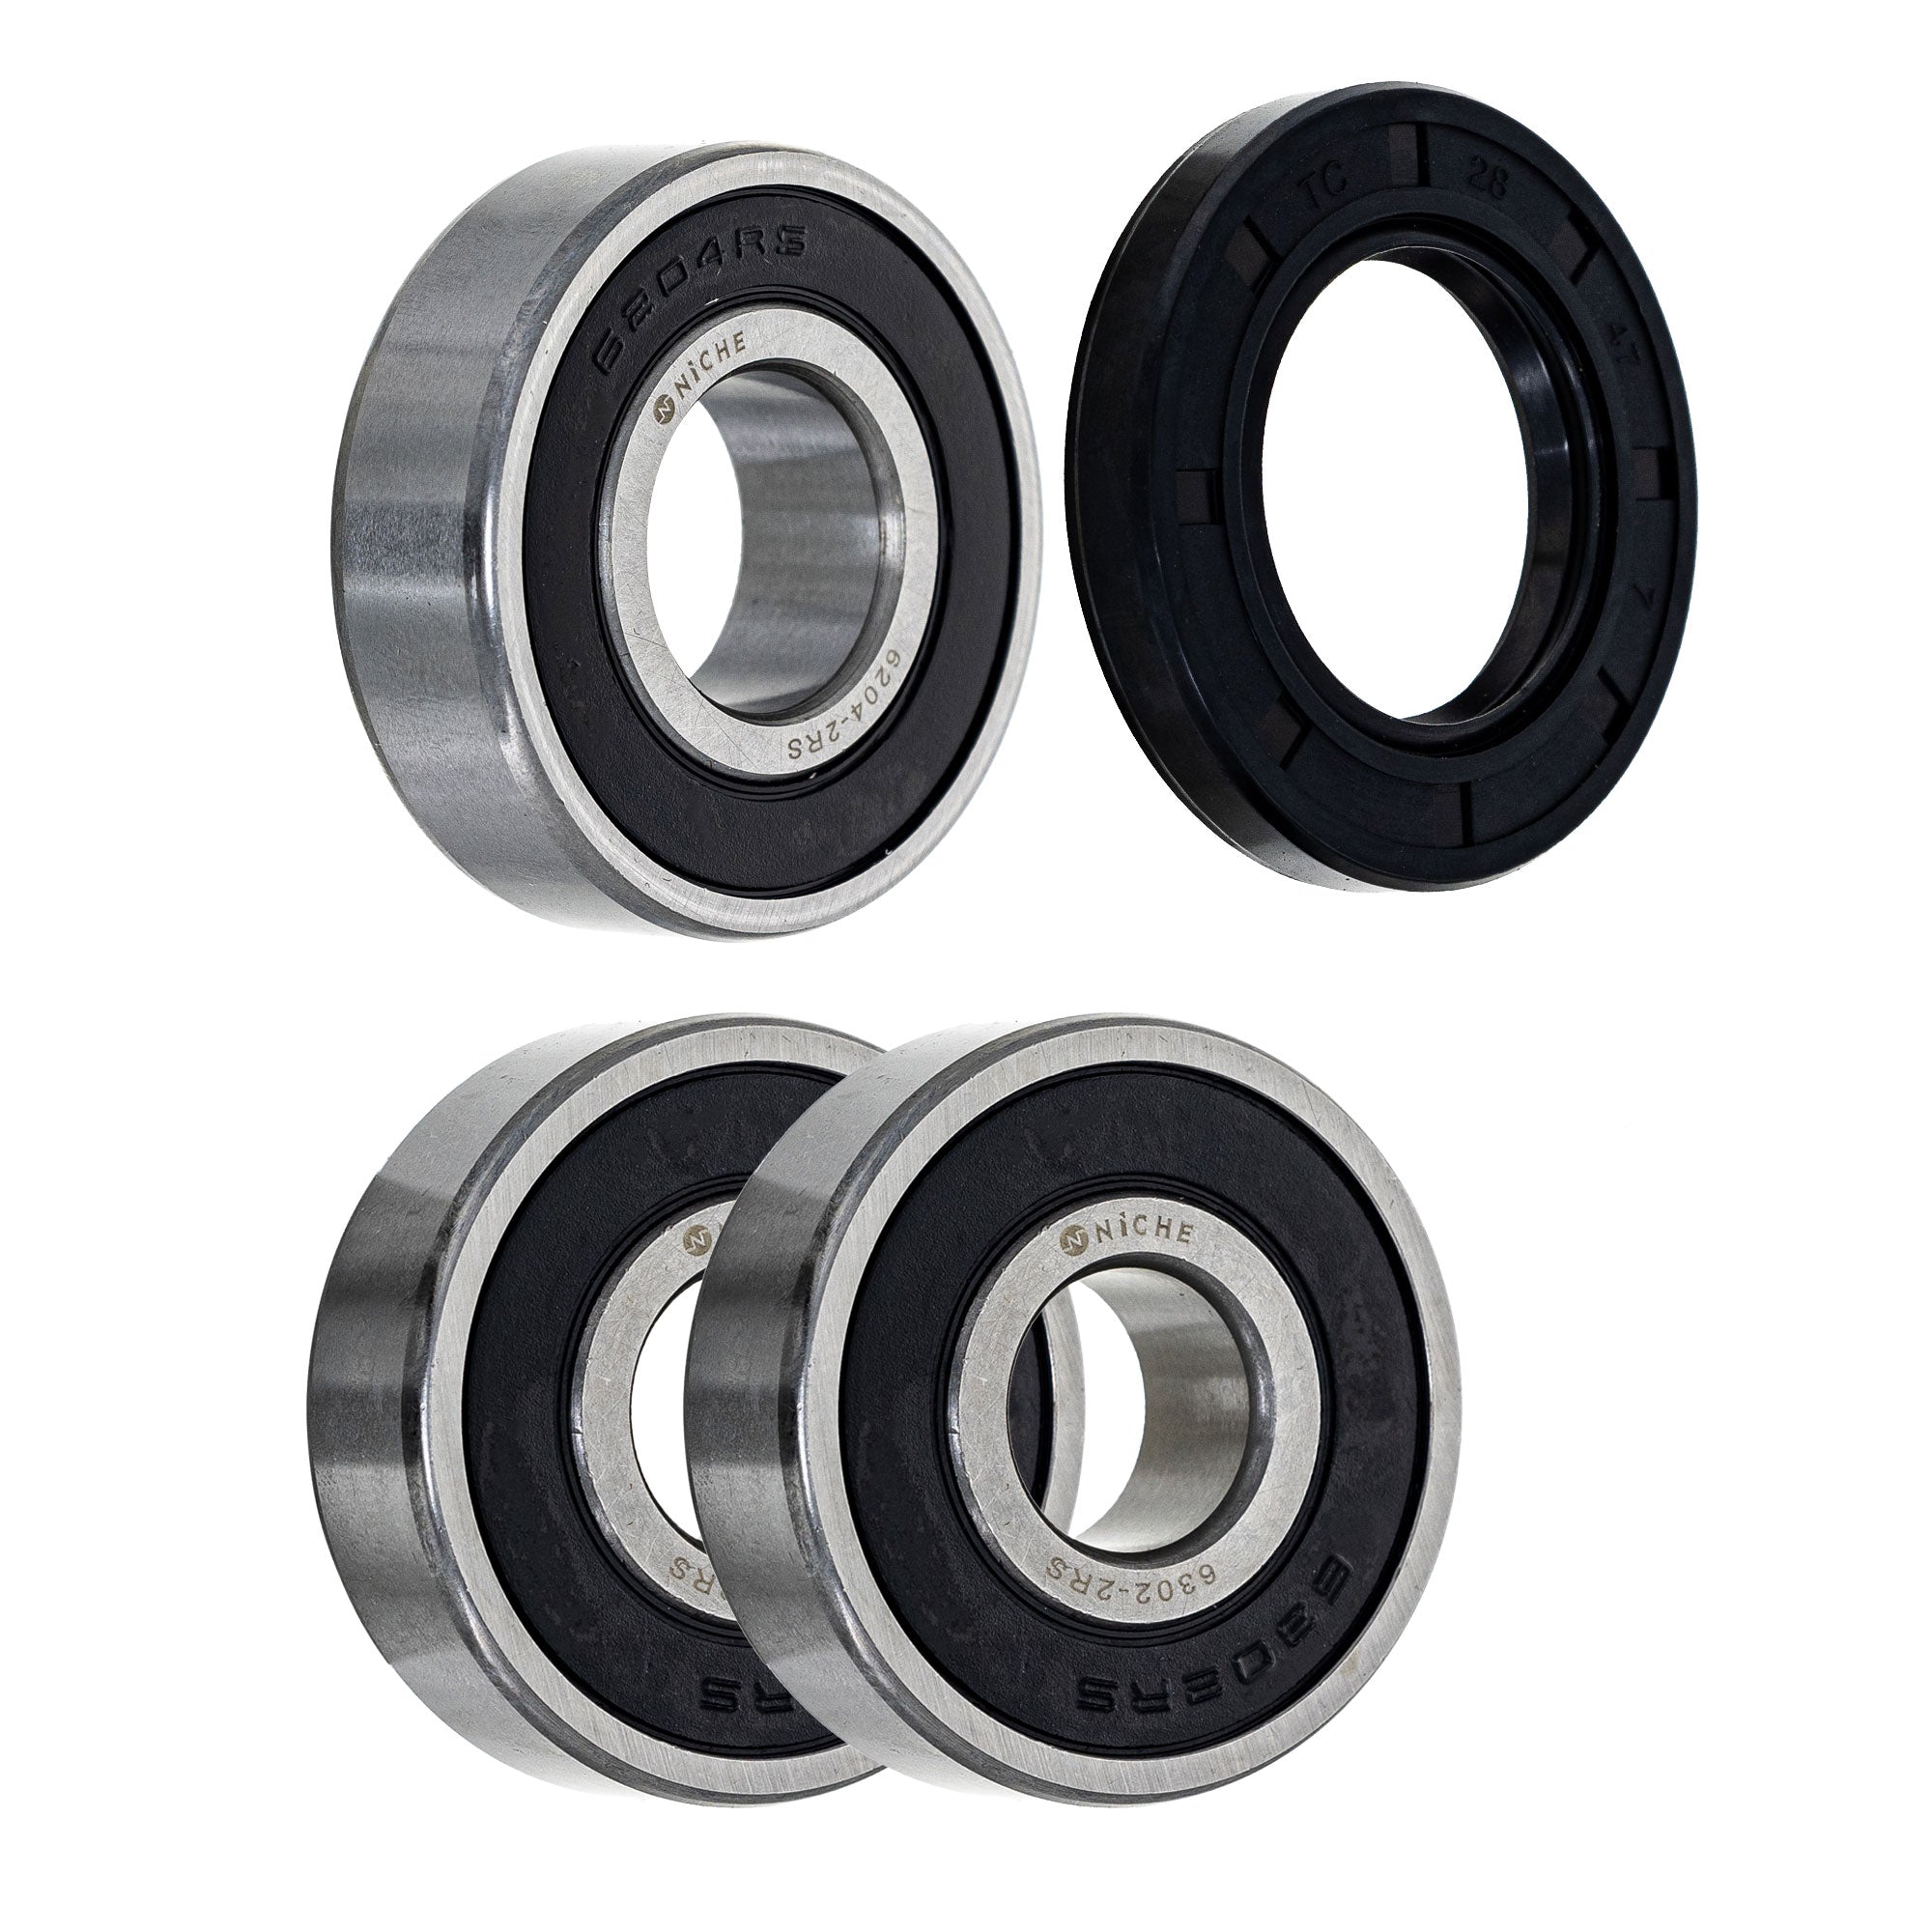 Wheel Bearing Seal Kit for zOTHER Ref No XT350 XT250 XL600R XL500R NICHE MK1008997